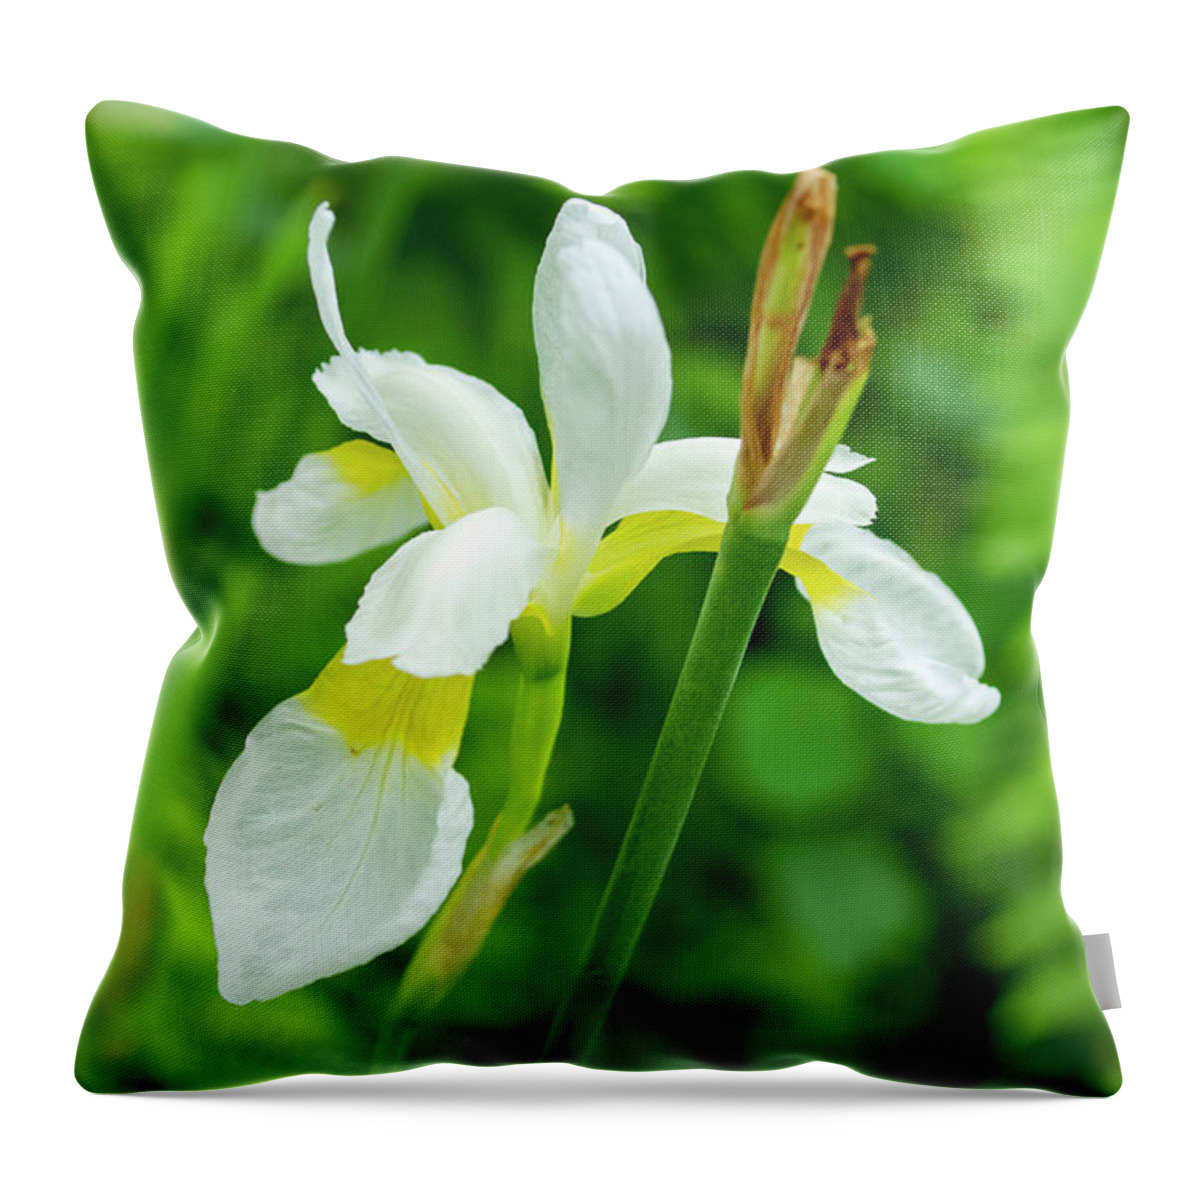 Iris Throw Pillow featuring the photograph White and Yellow Iris Flower by Lisa Blake